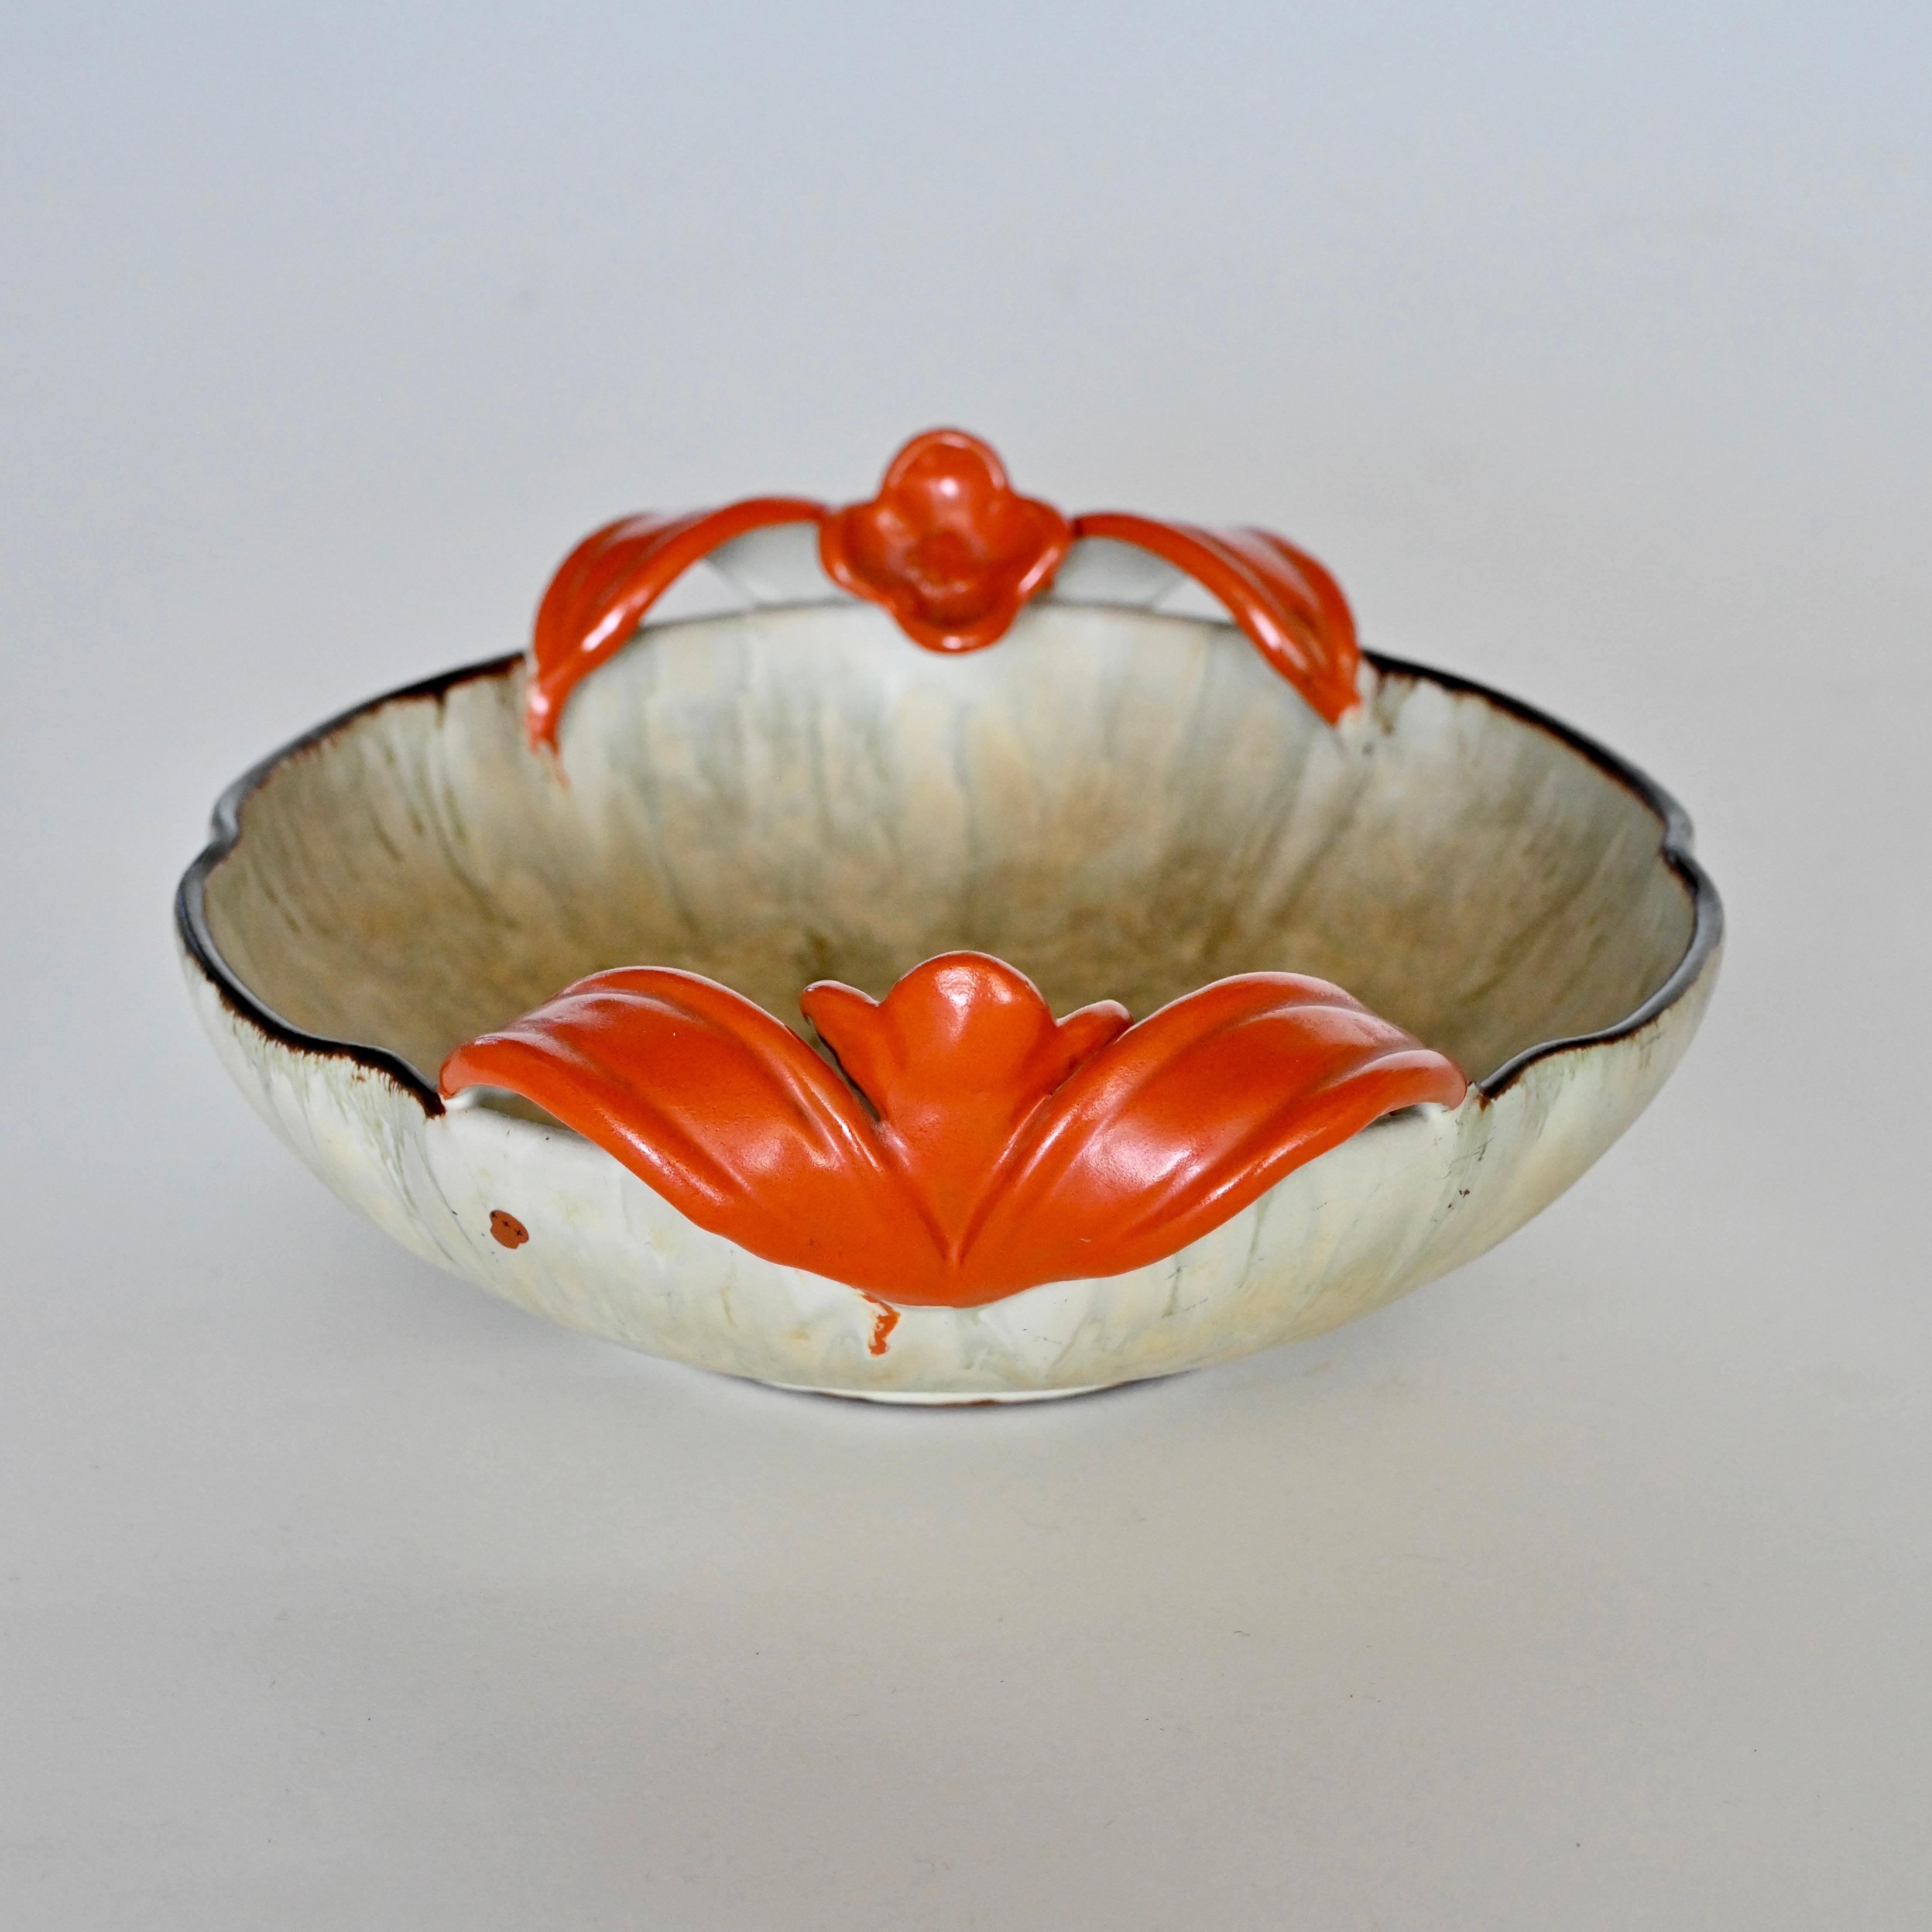 Glazed ceramic bowl by Anna-Lisa Thomson for Upsala-Ekeby. Sweden, 1940's.